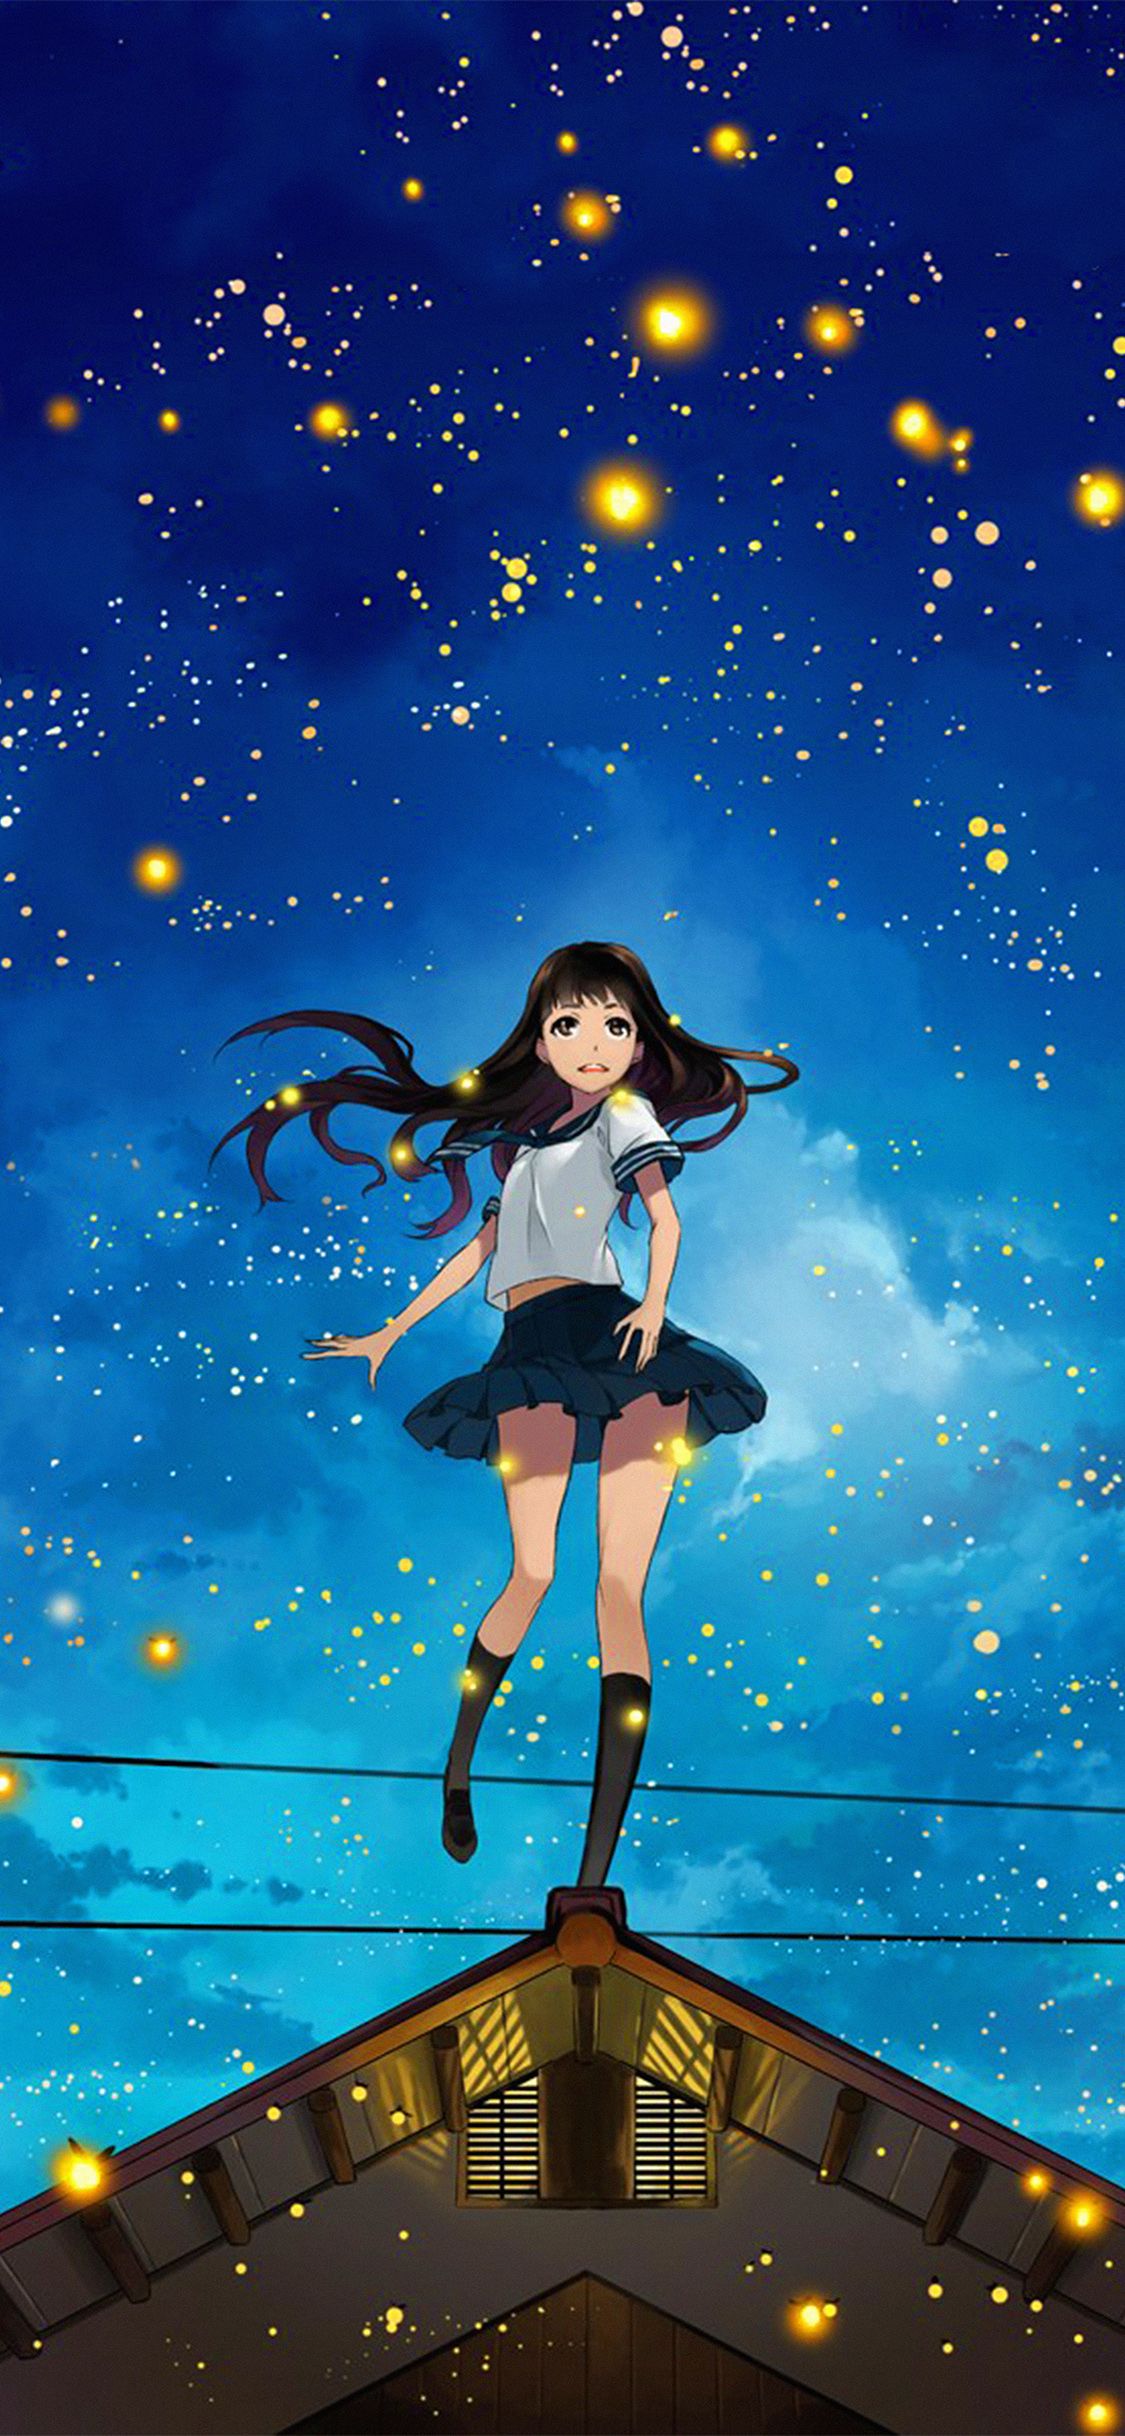 Anime girl standing on top of a building with fireflies - Anime girl